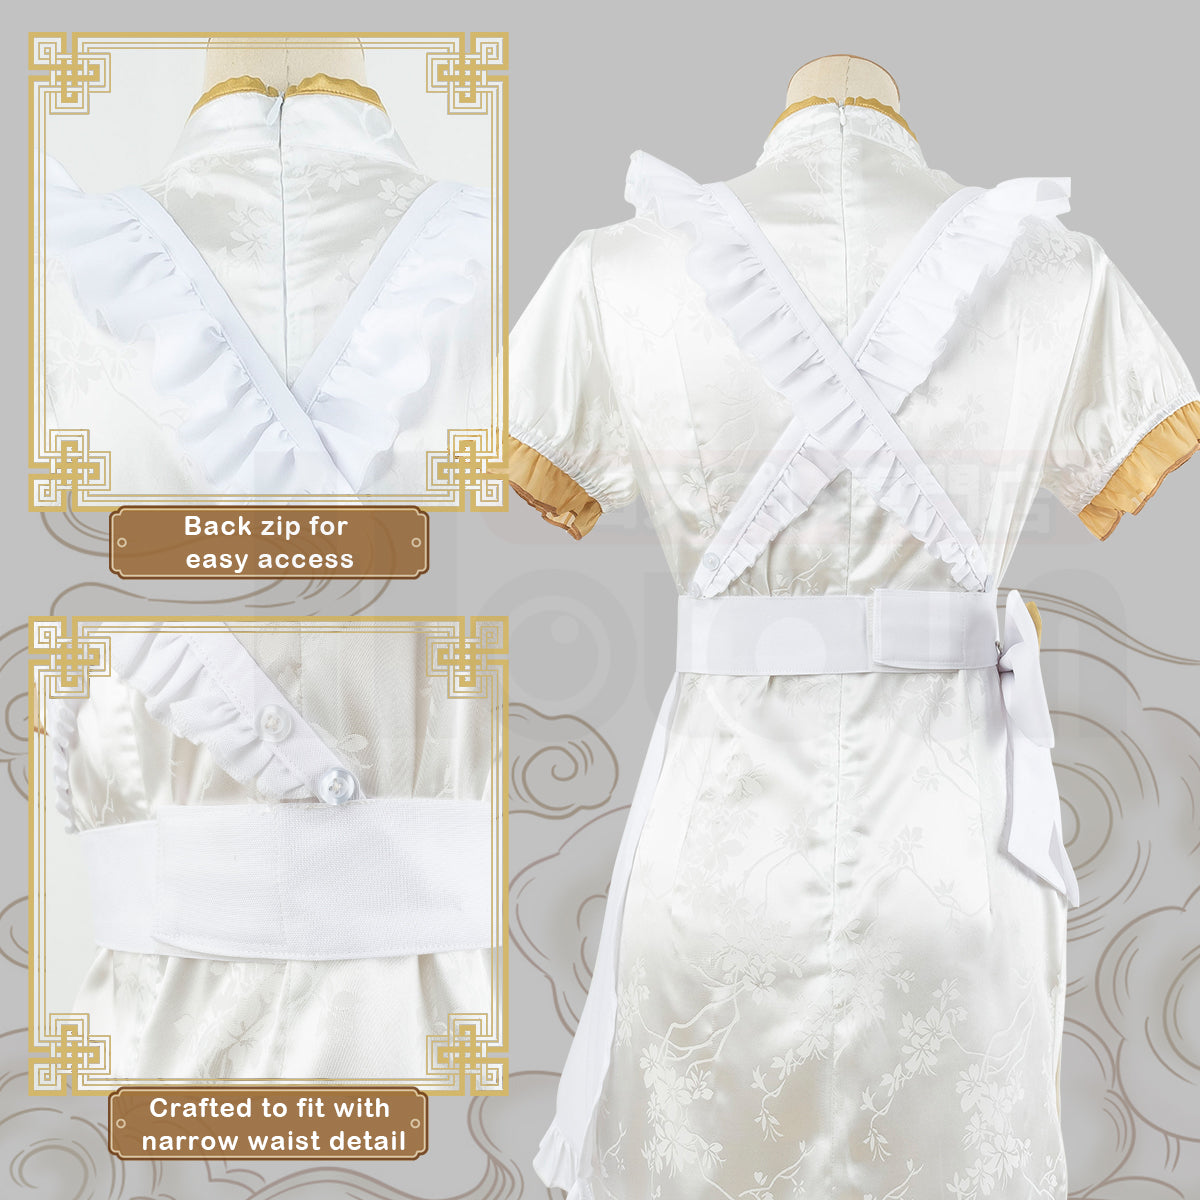 HOLOUN Lolita Maid Dress Skirt China Costume Cute Cheongsam Cafe Uniform Apron White Color Short Sleeve Daily Wear Gift